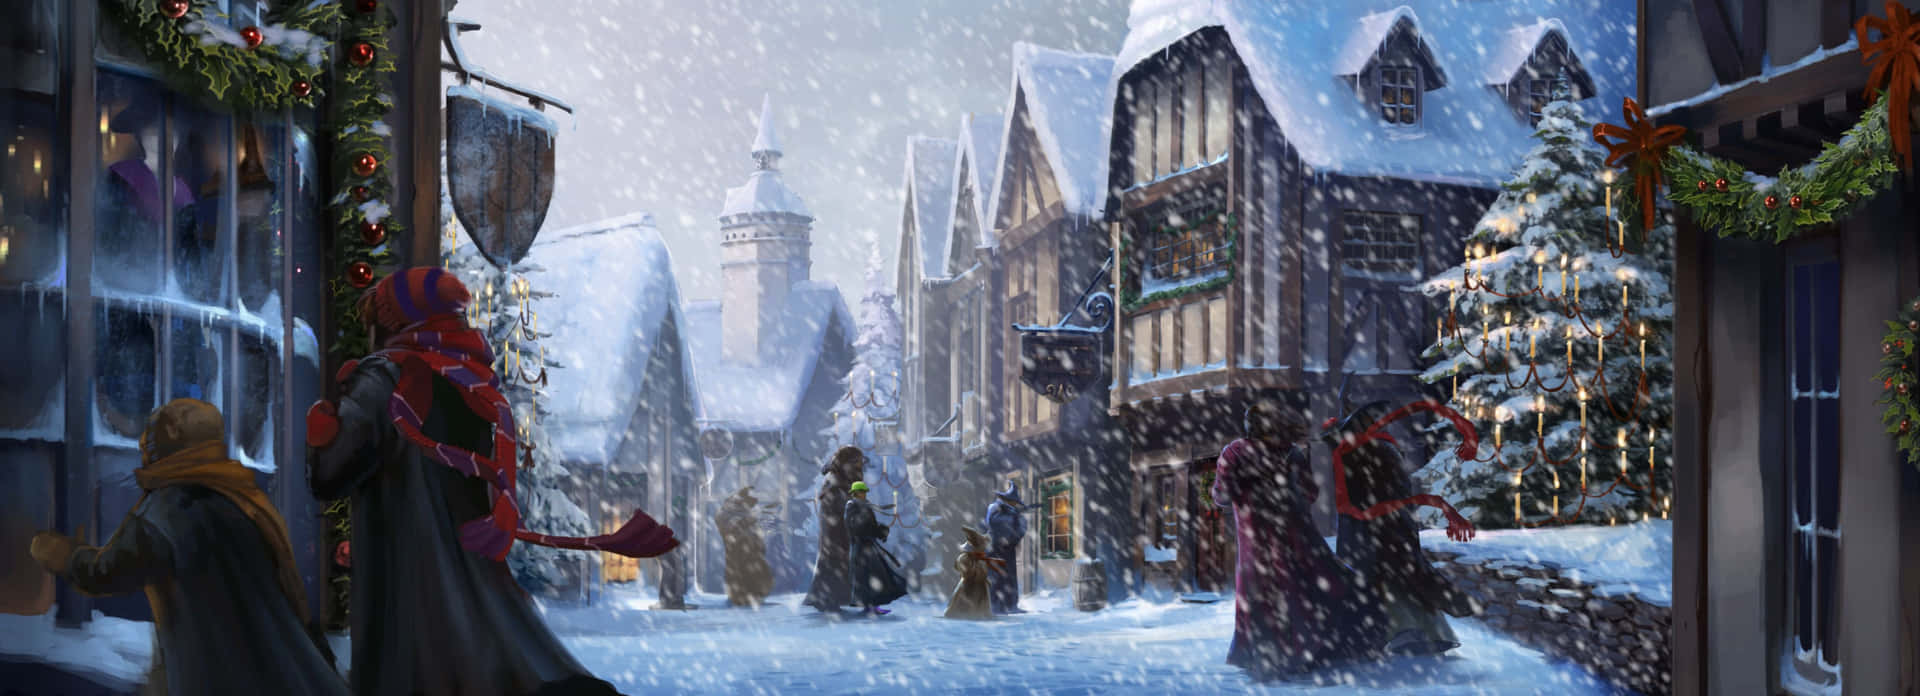 Magical Harry Potter Christmas